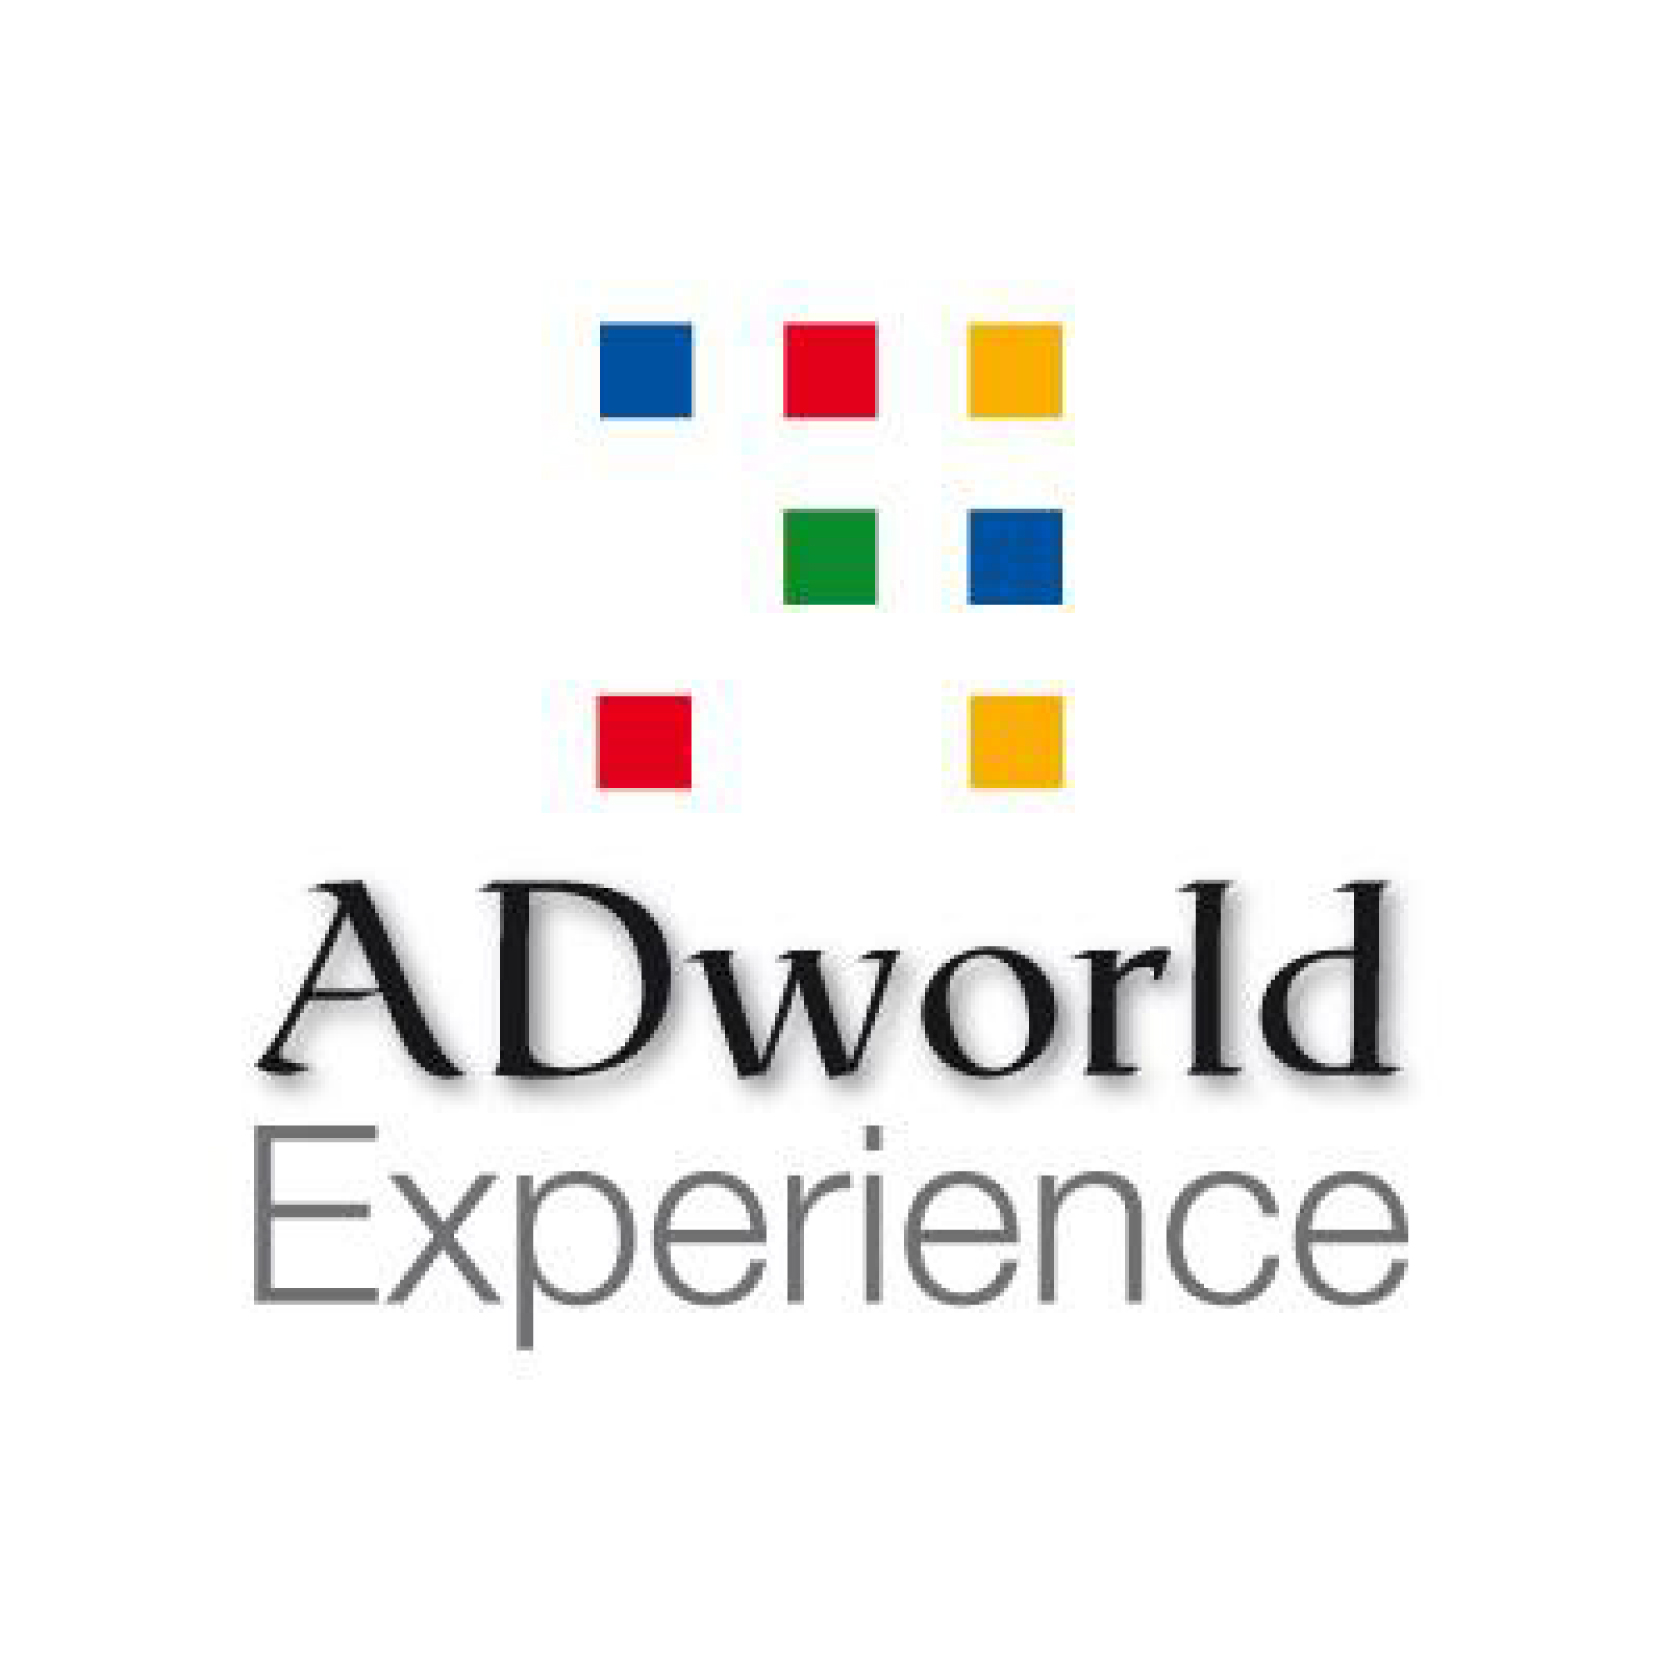 Adworld Experience